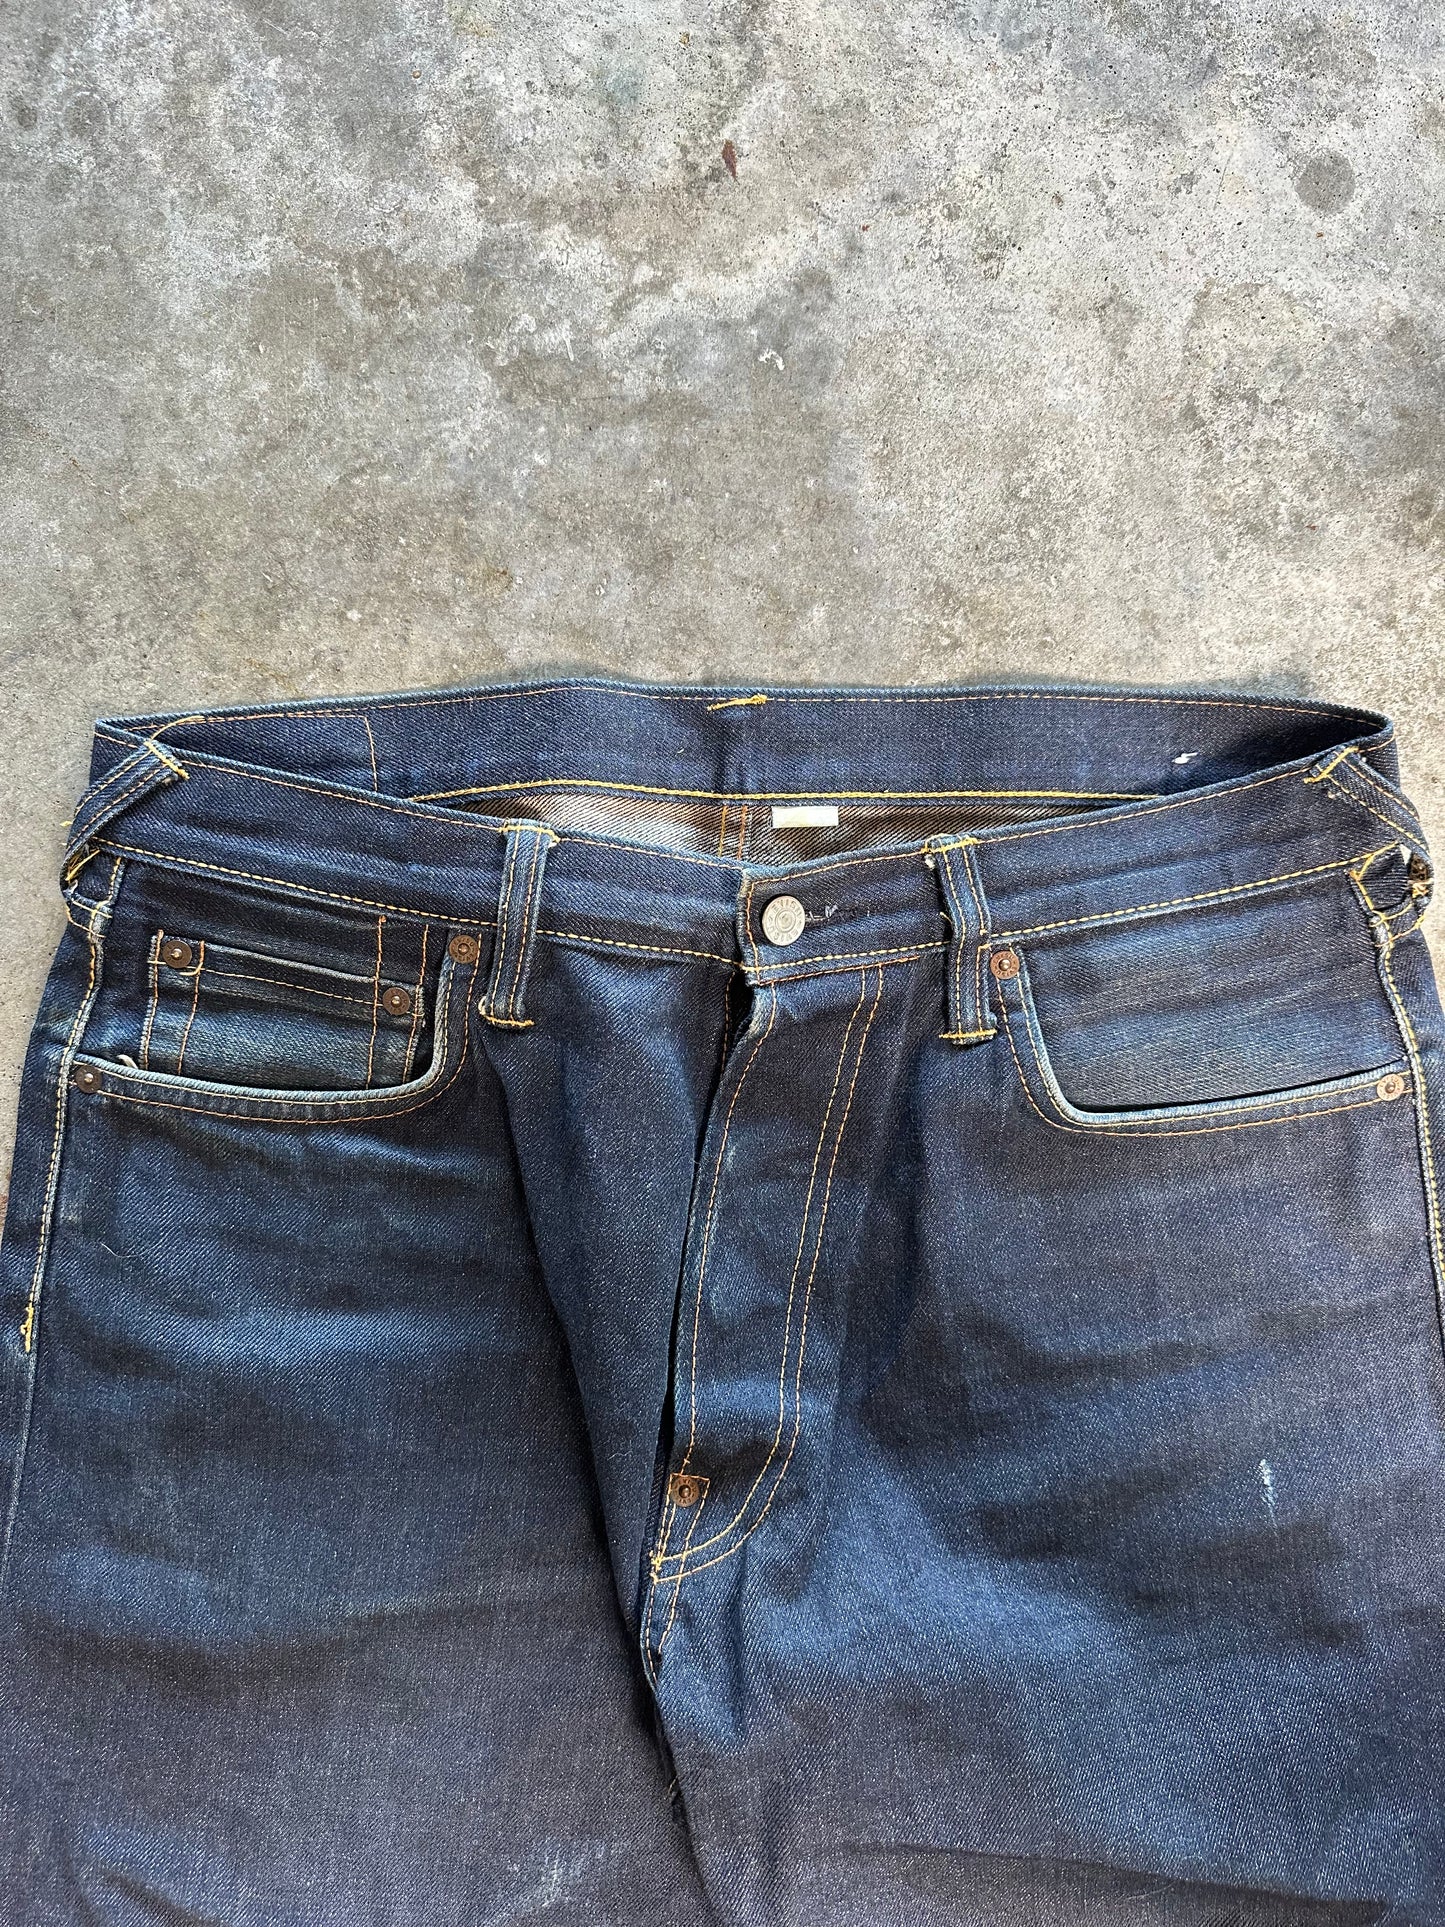 (33 x 27) EVISU Denim Jeans